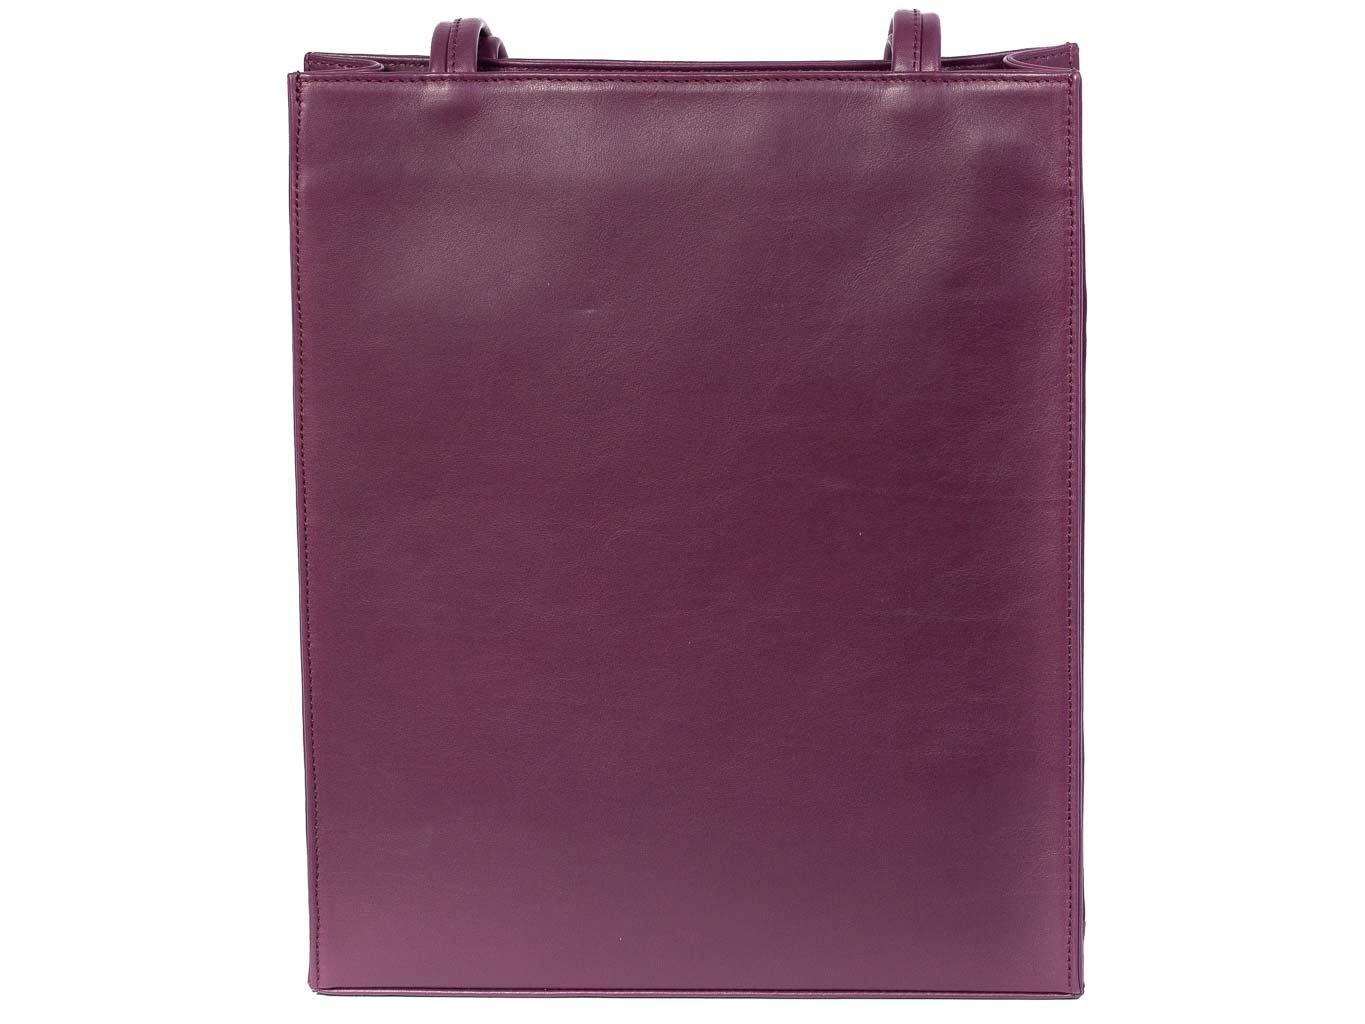 Tote Studded Handbag in Deep Purple by Sherene Melinda back